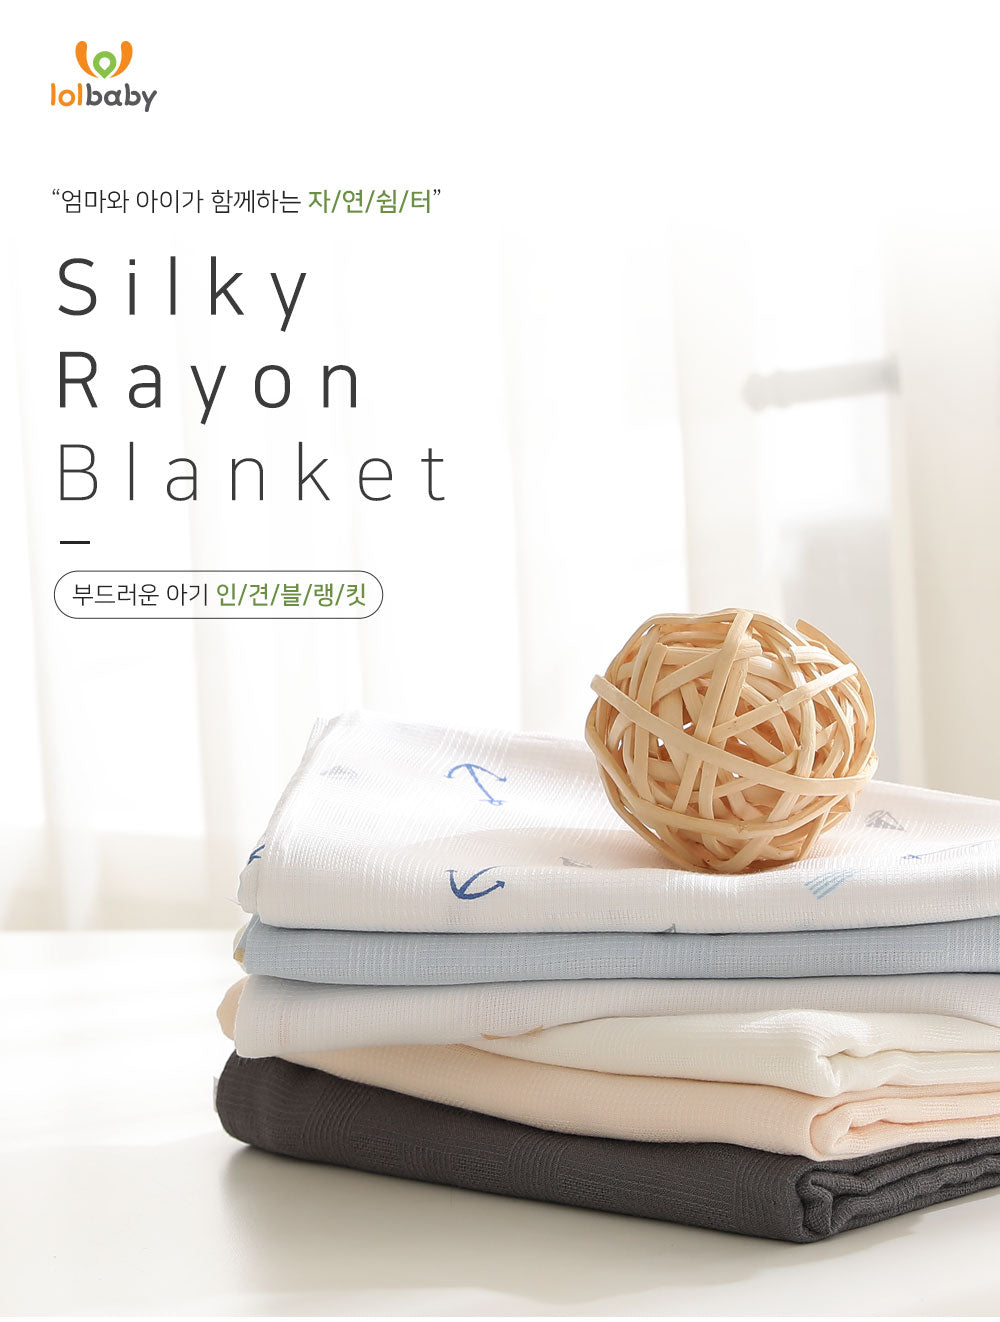 LOLBaby Silk Rayon Blanket